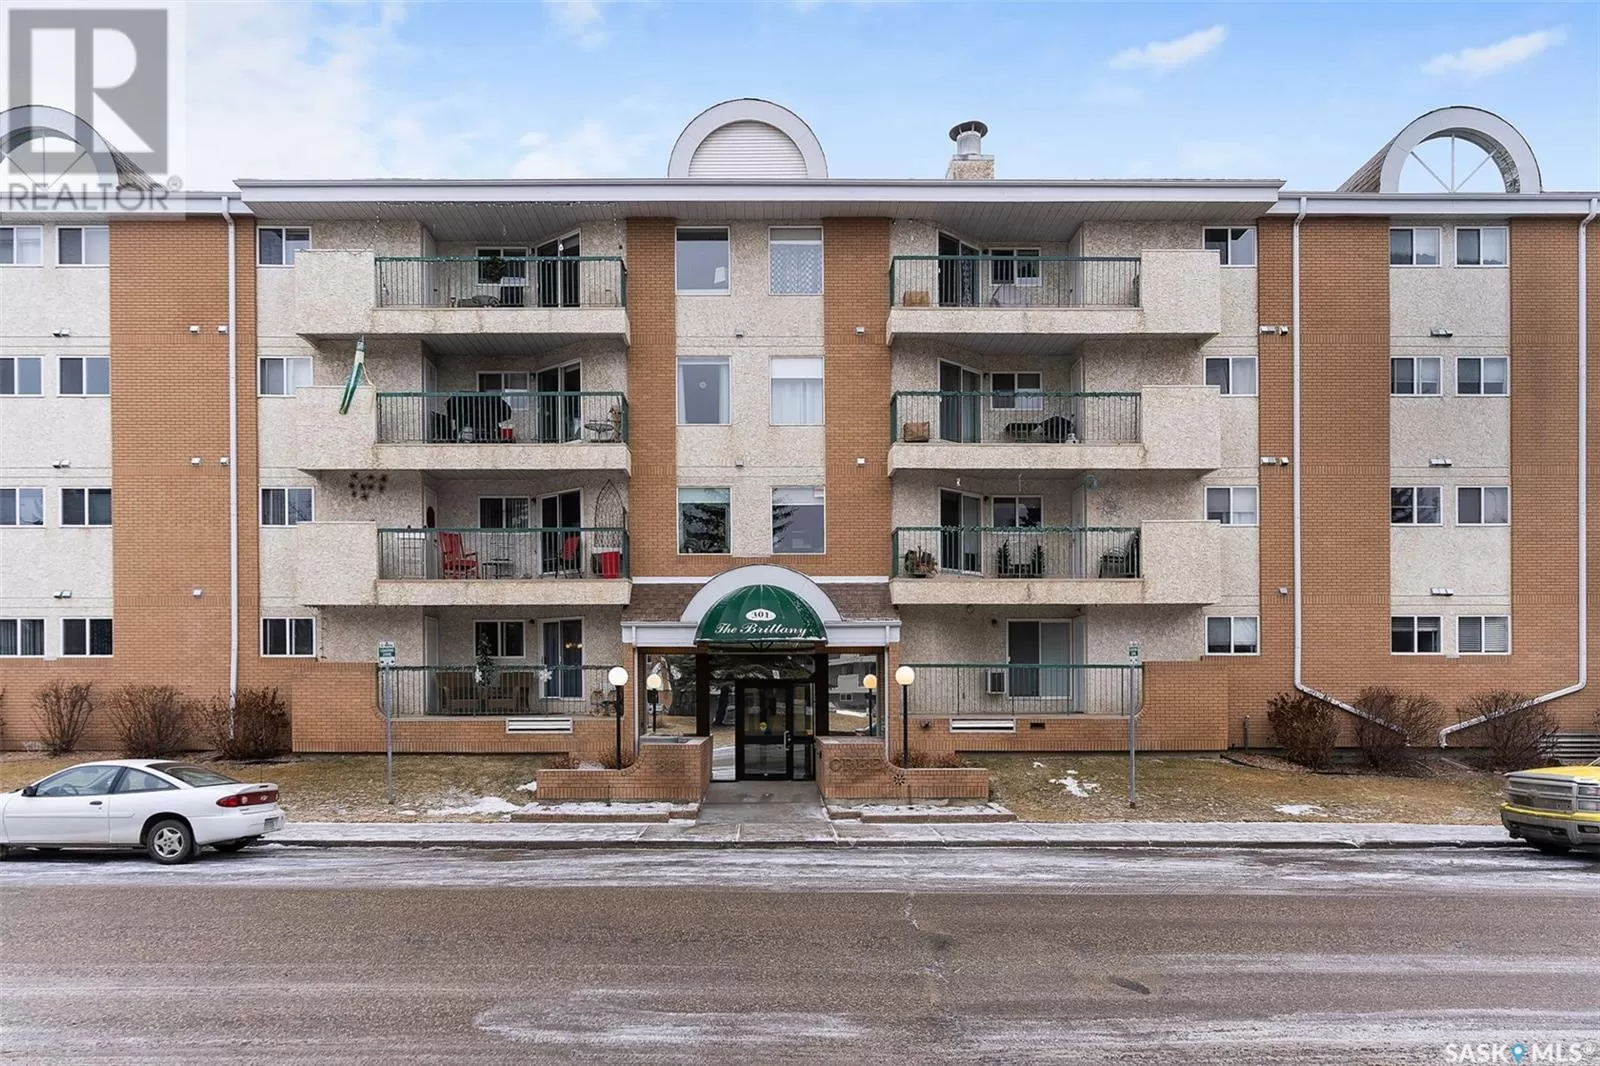 Apartment for rent: 209 301 Cree Crescent, Saskatoon, Saskatchewan S7K 7Y3